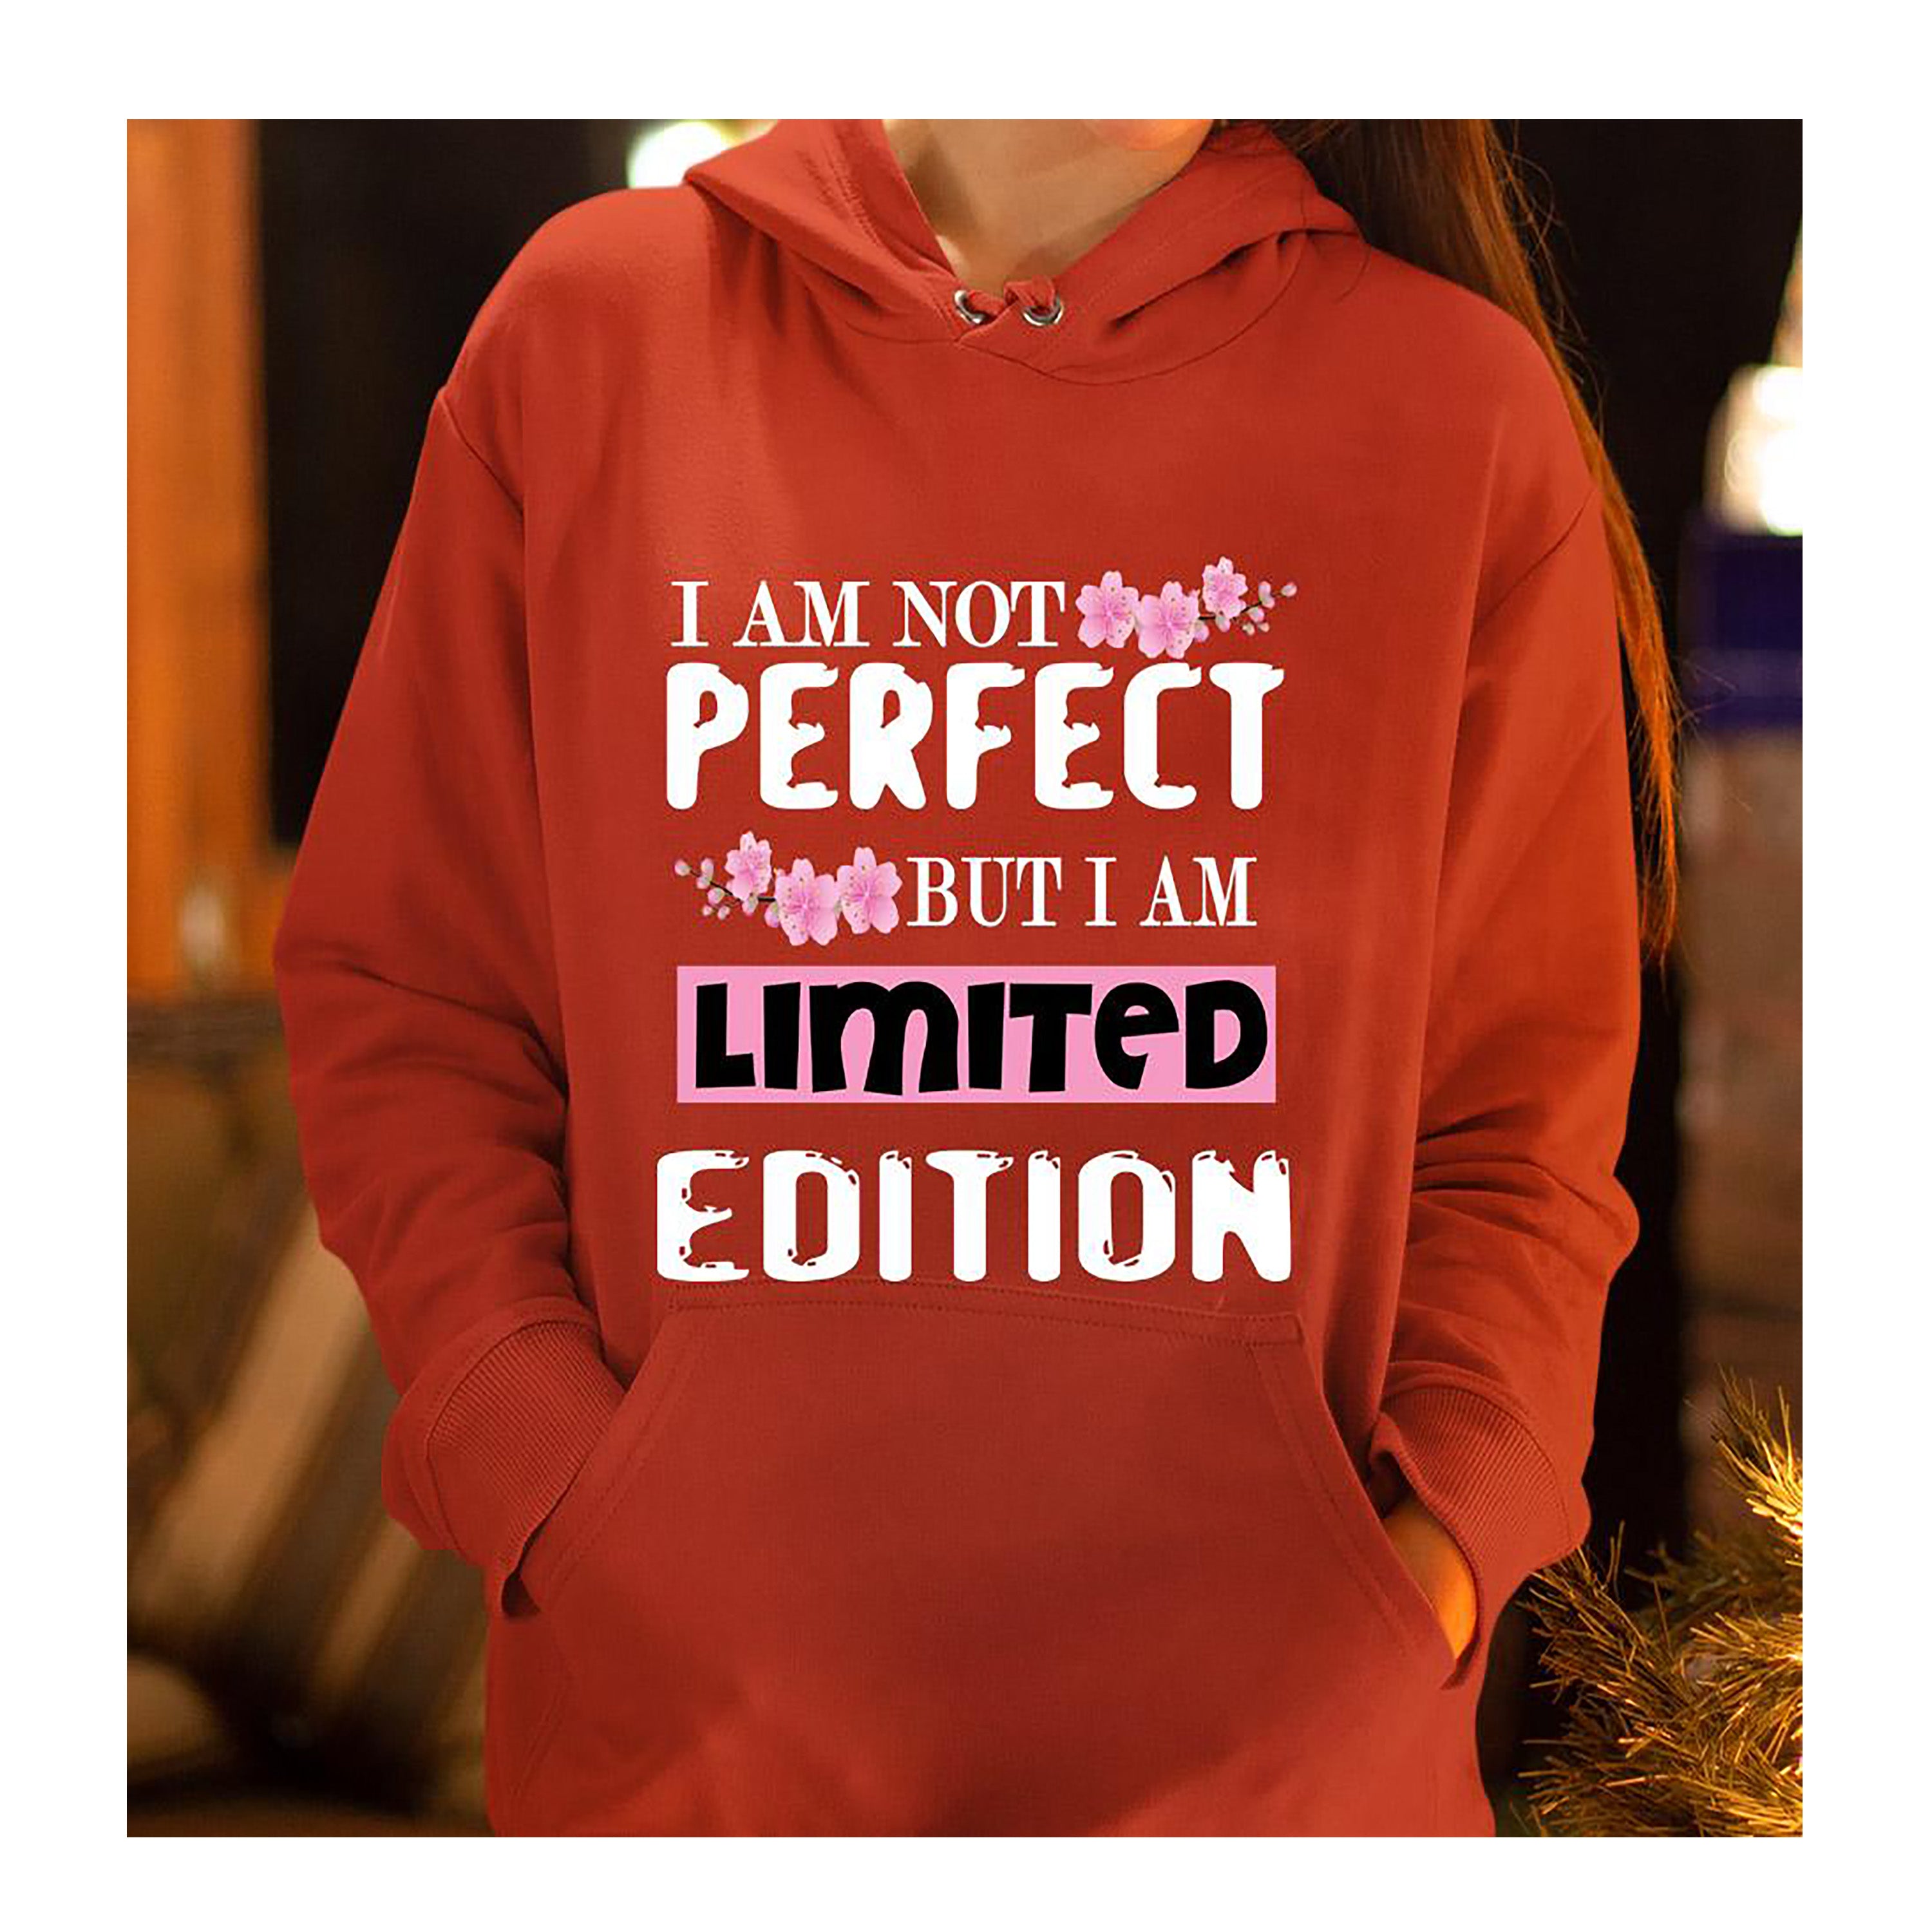 "I M NOT PERFECT" Hoodie & Sweatshirt